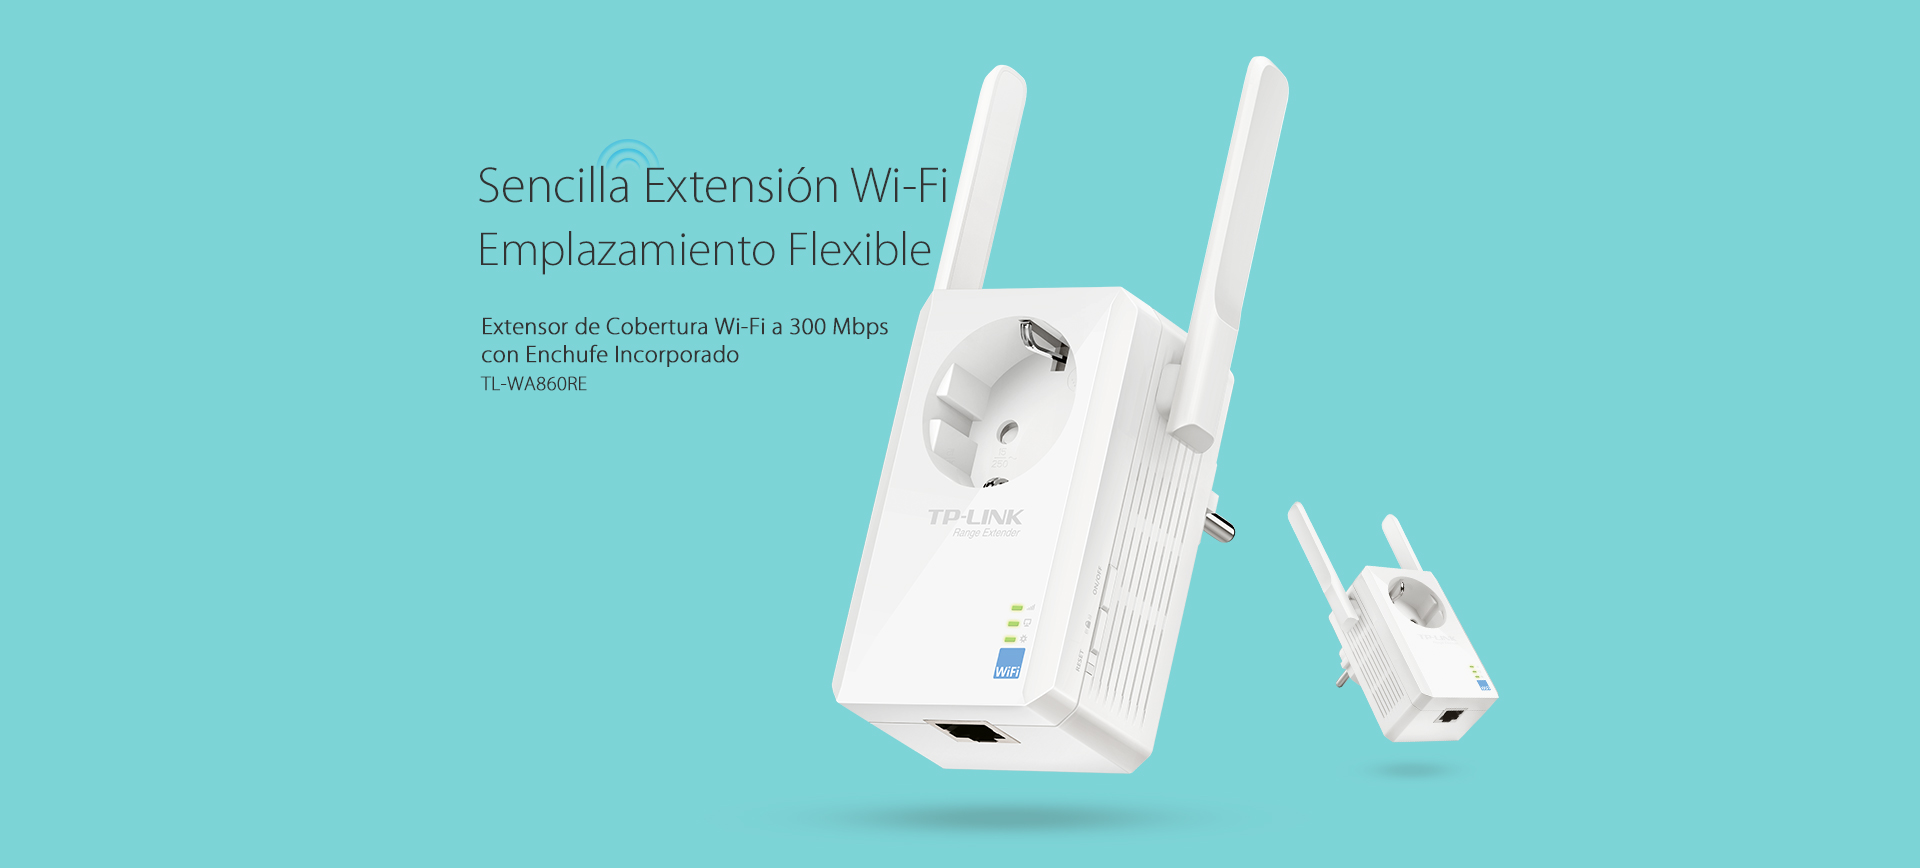 TL-WA860RE, Extensor de Cobertura Wi-Fi a 300 Mbps con Enchufe Incorporado